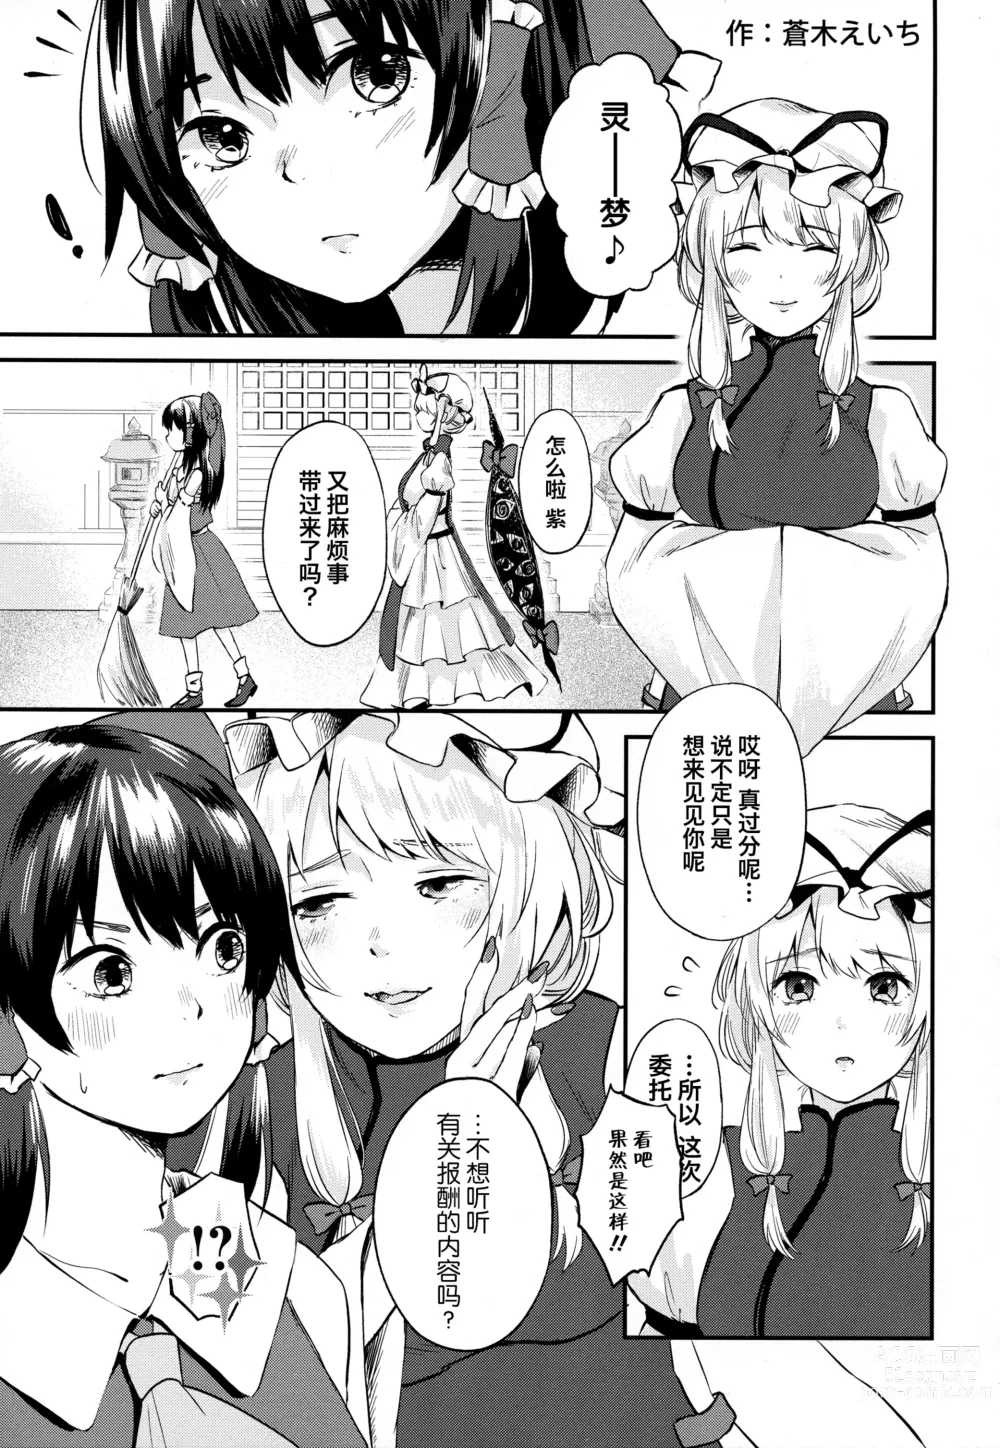 Page 15 of doujinshi 发现了灵梦可爱之处的两人制作了色情的合同志